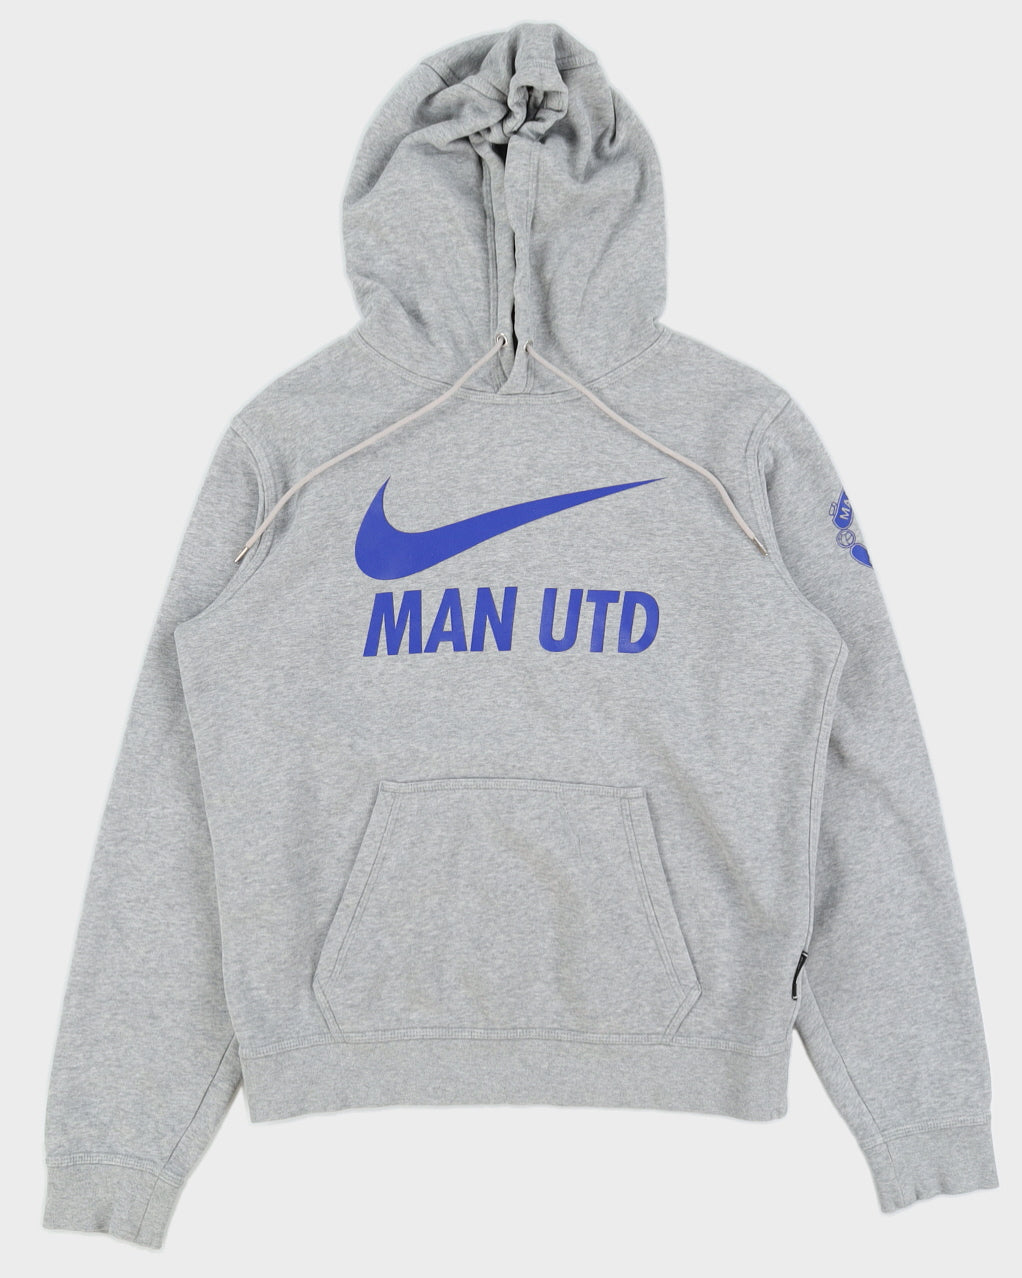 Nike Manchester United Marle Hoody - S